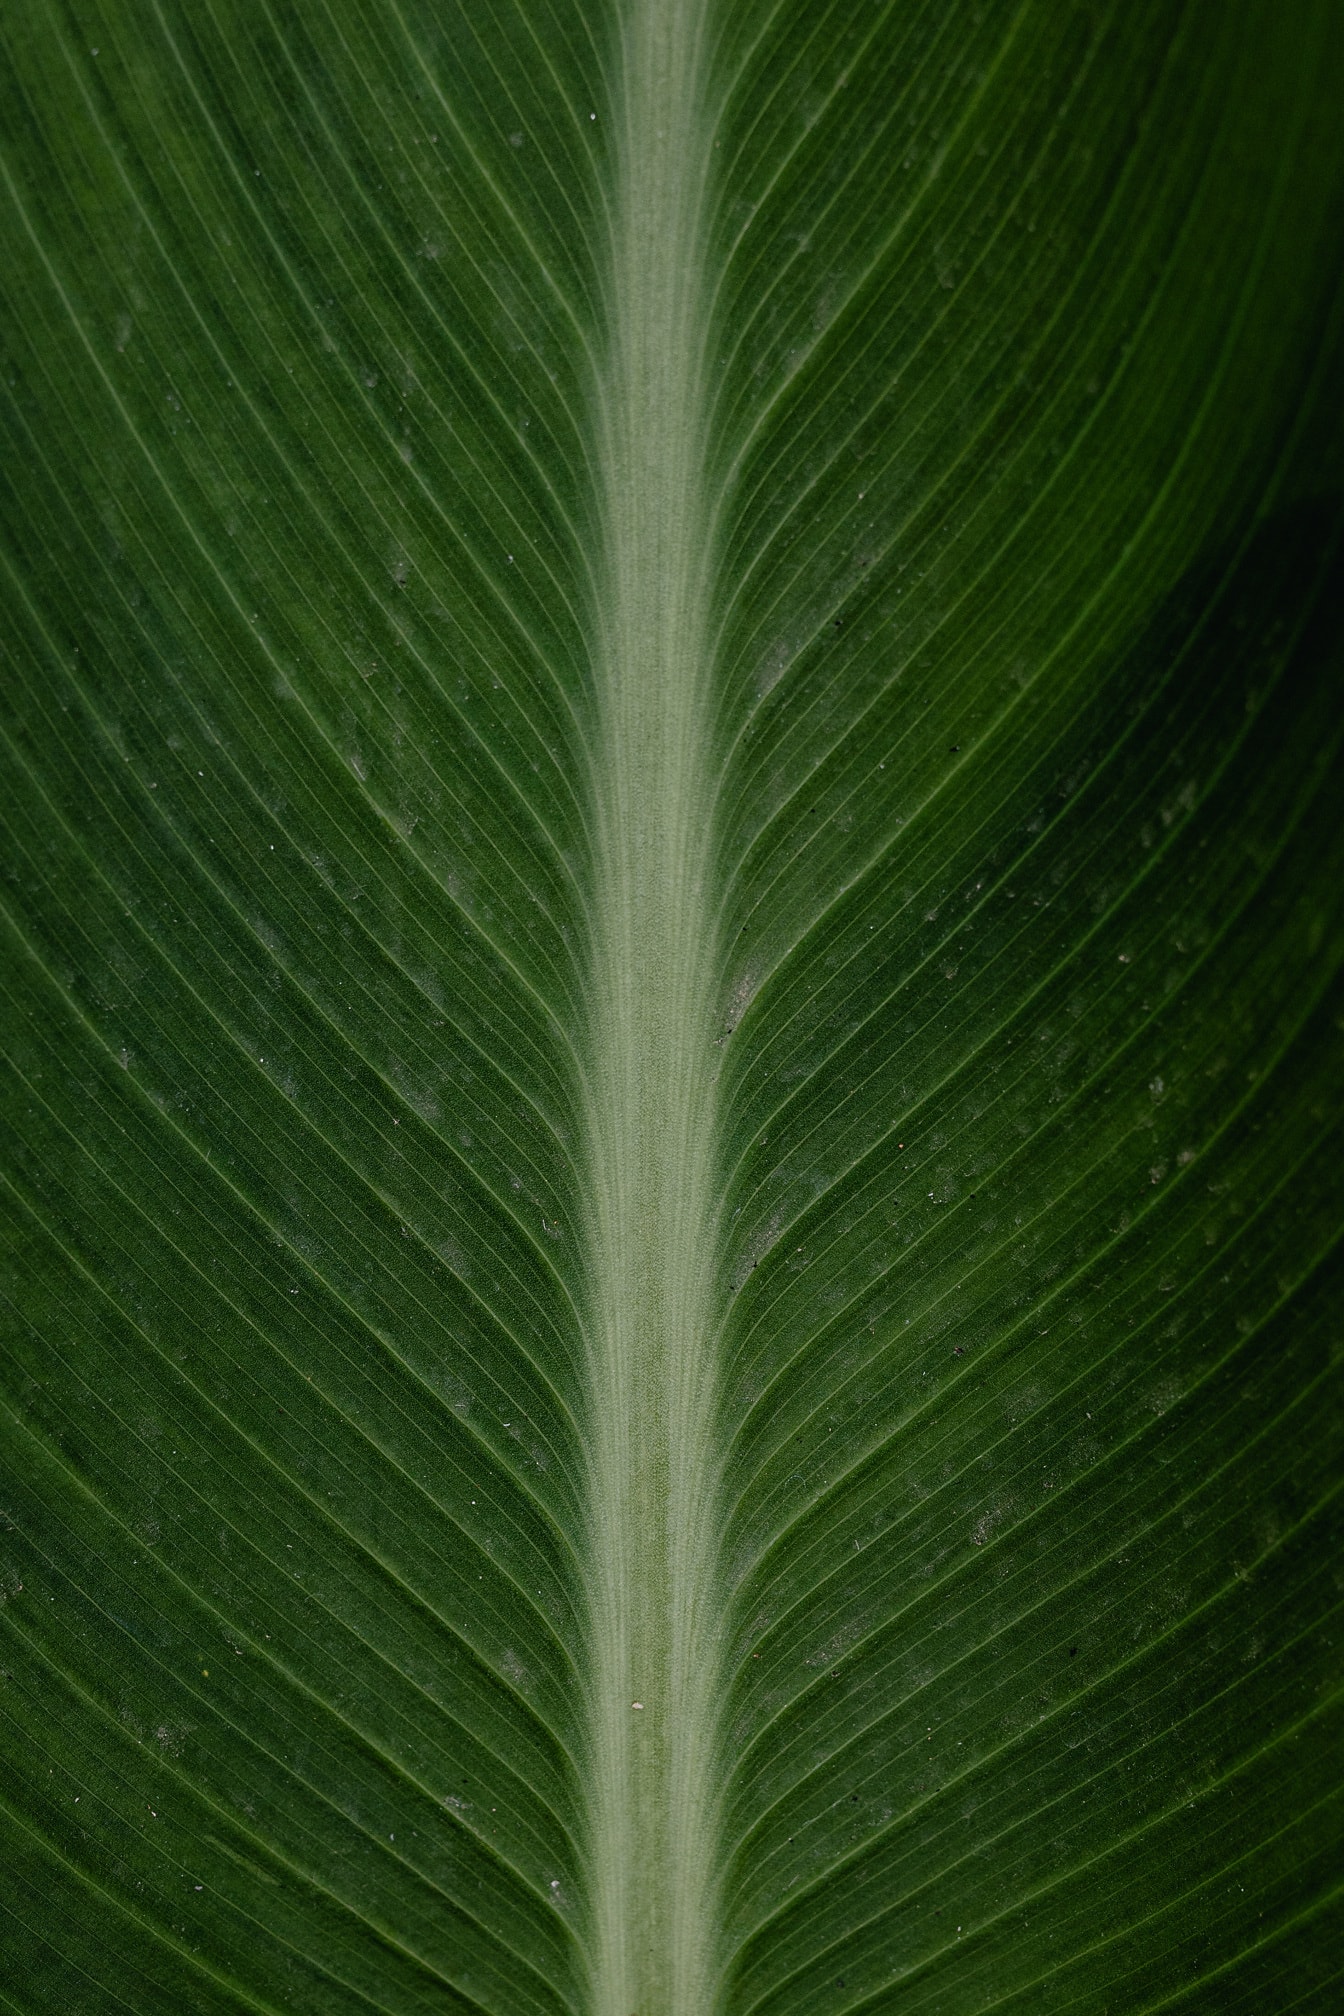 Nahaufnahme eines großen dunkelgrünen Palmblatts